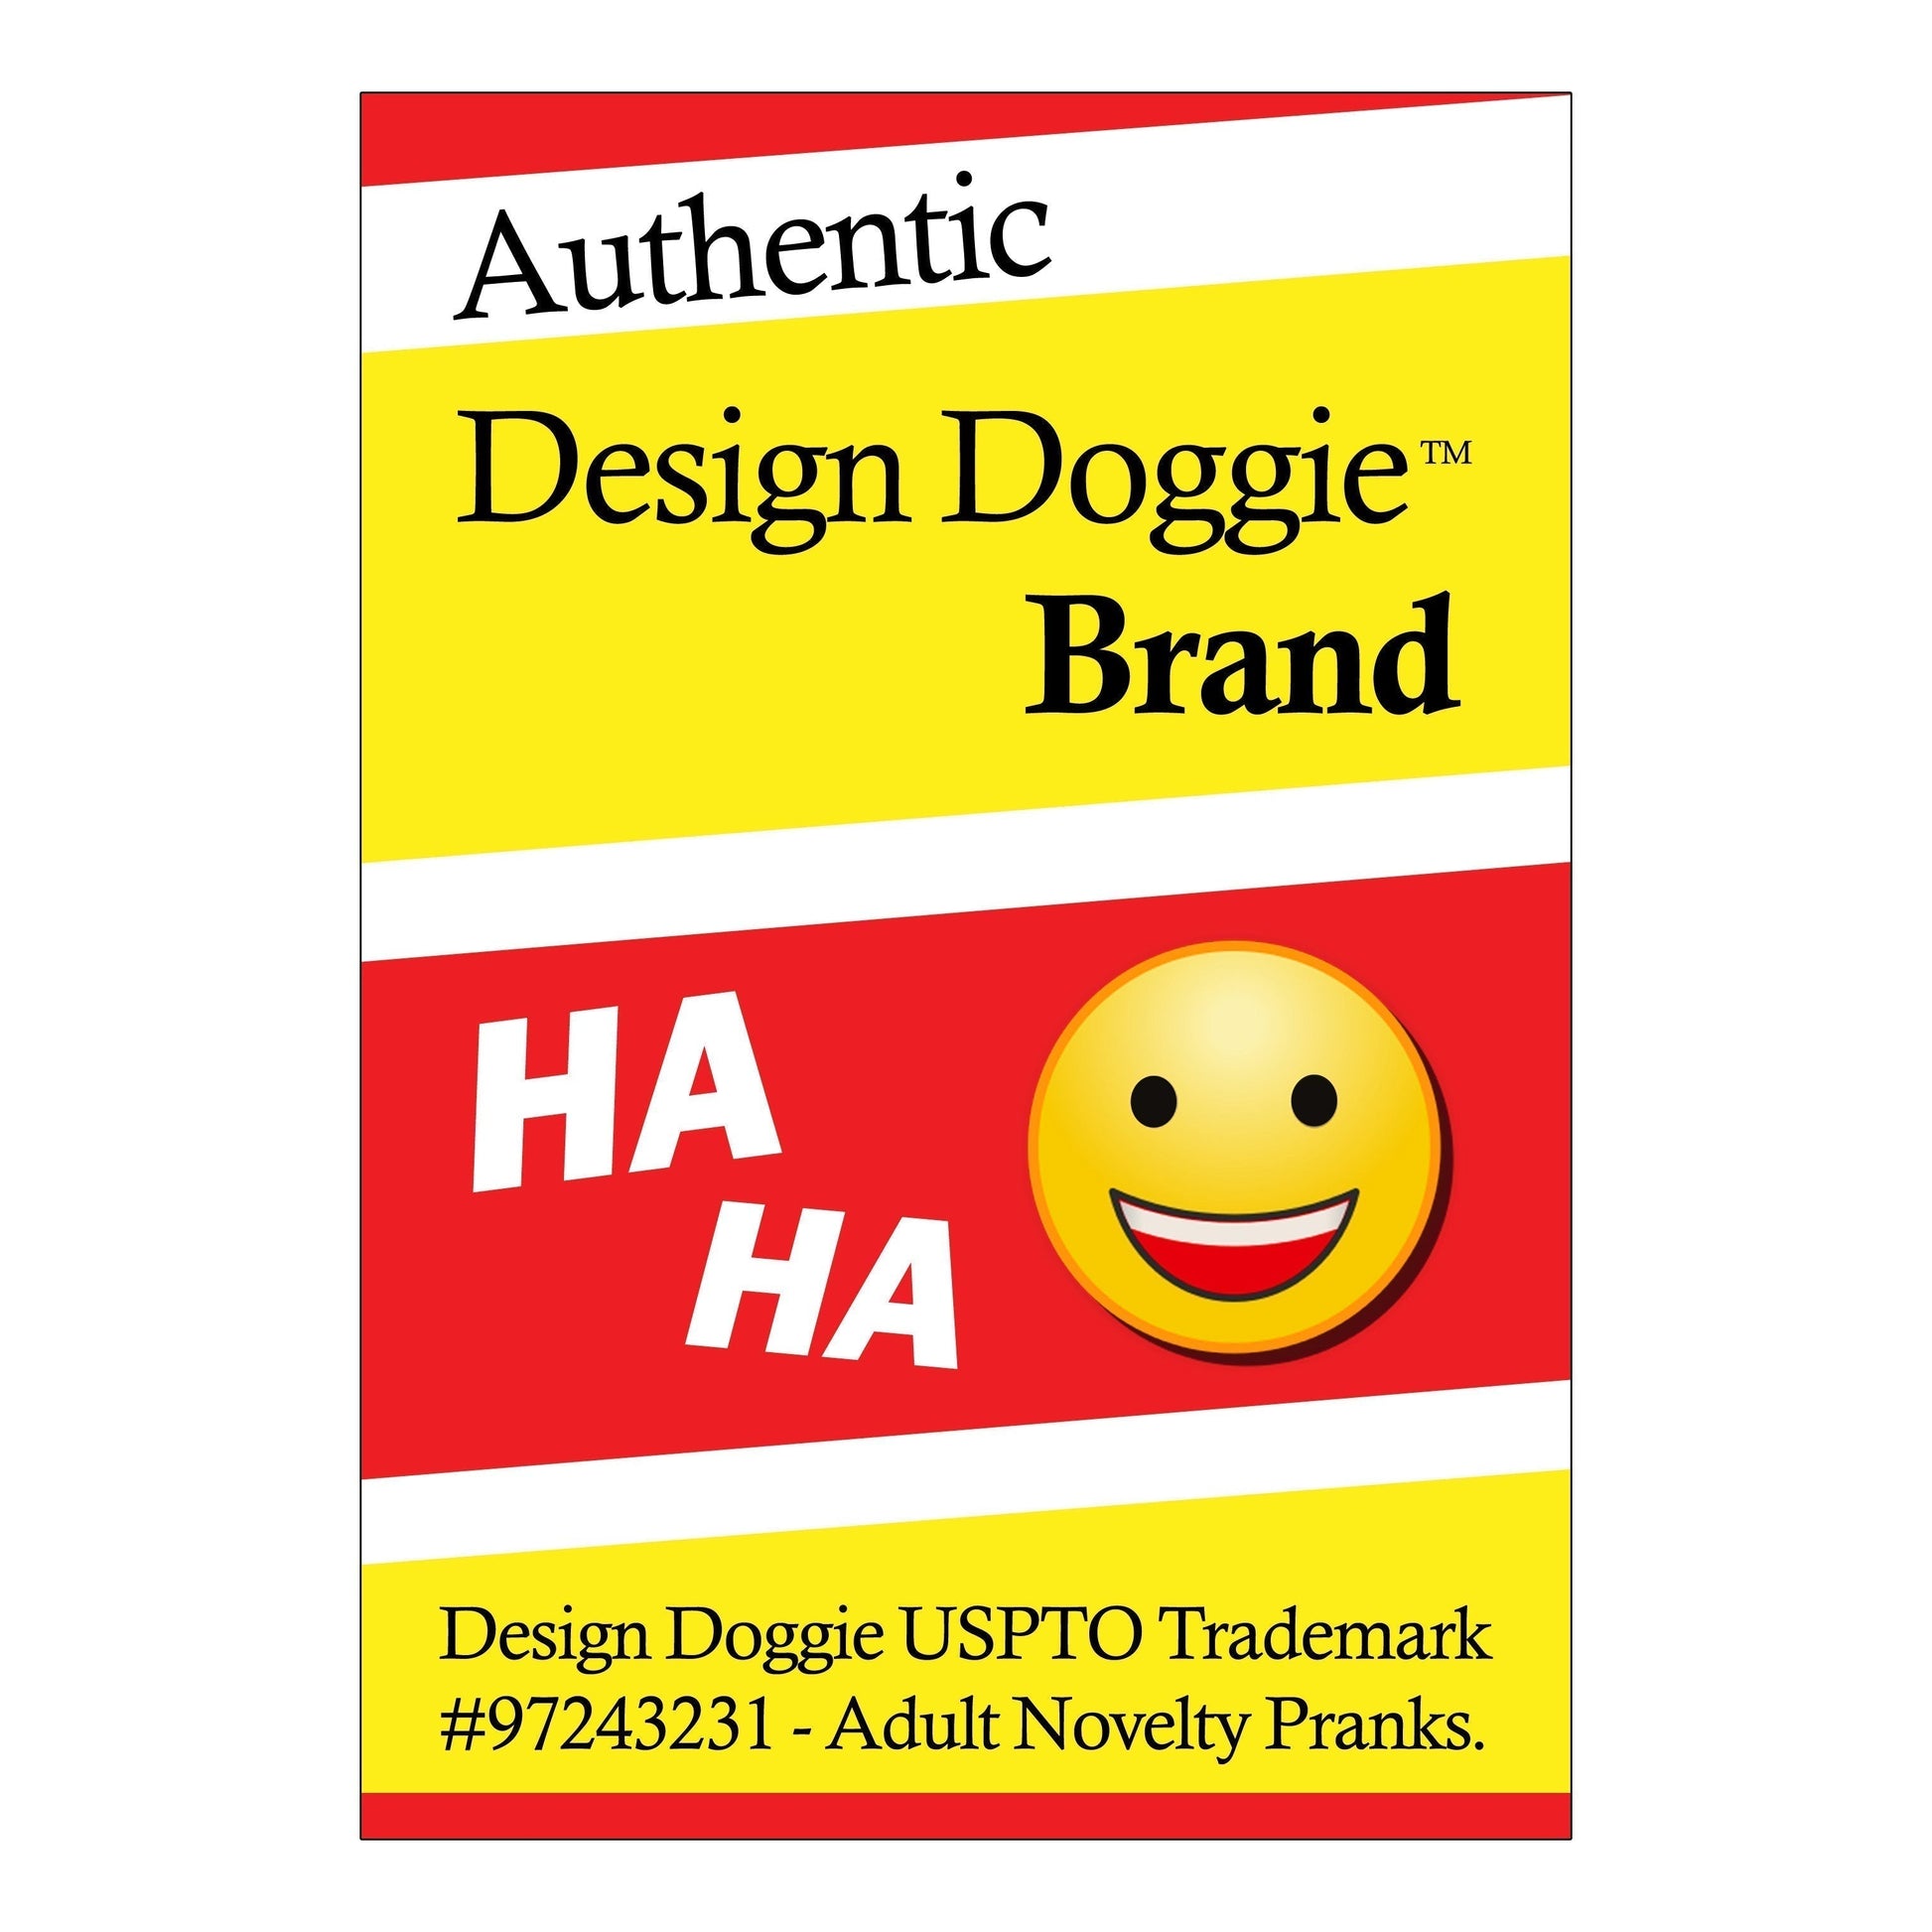 How to Seduce your Mailman Design Doggie Brand